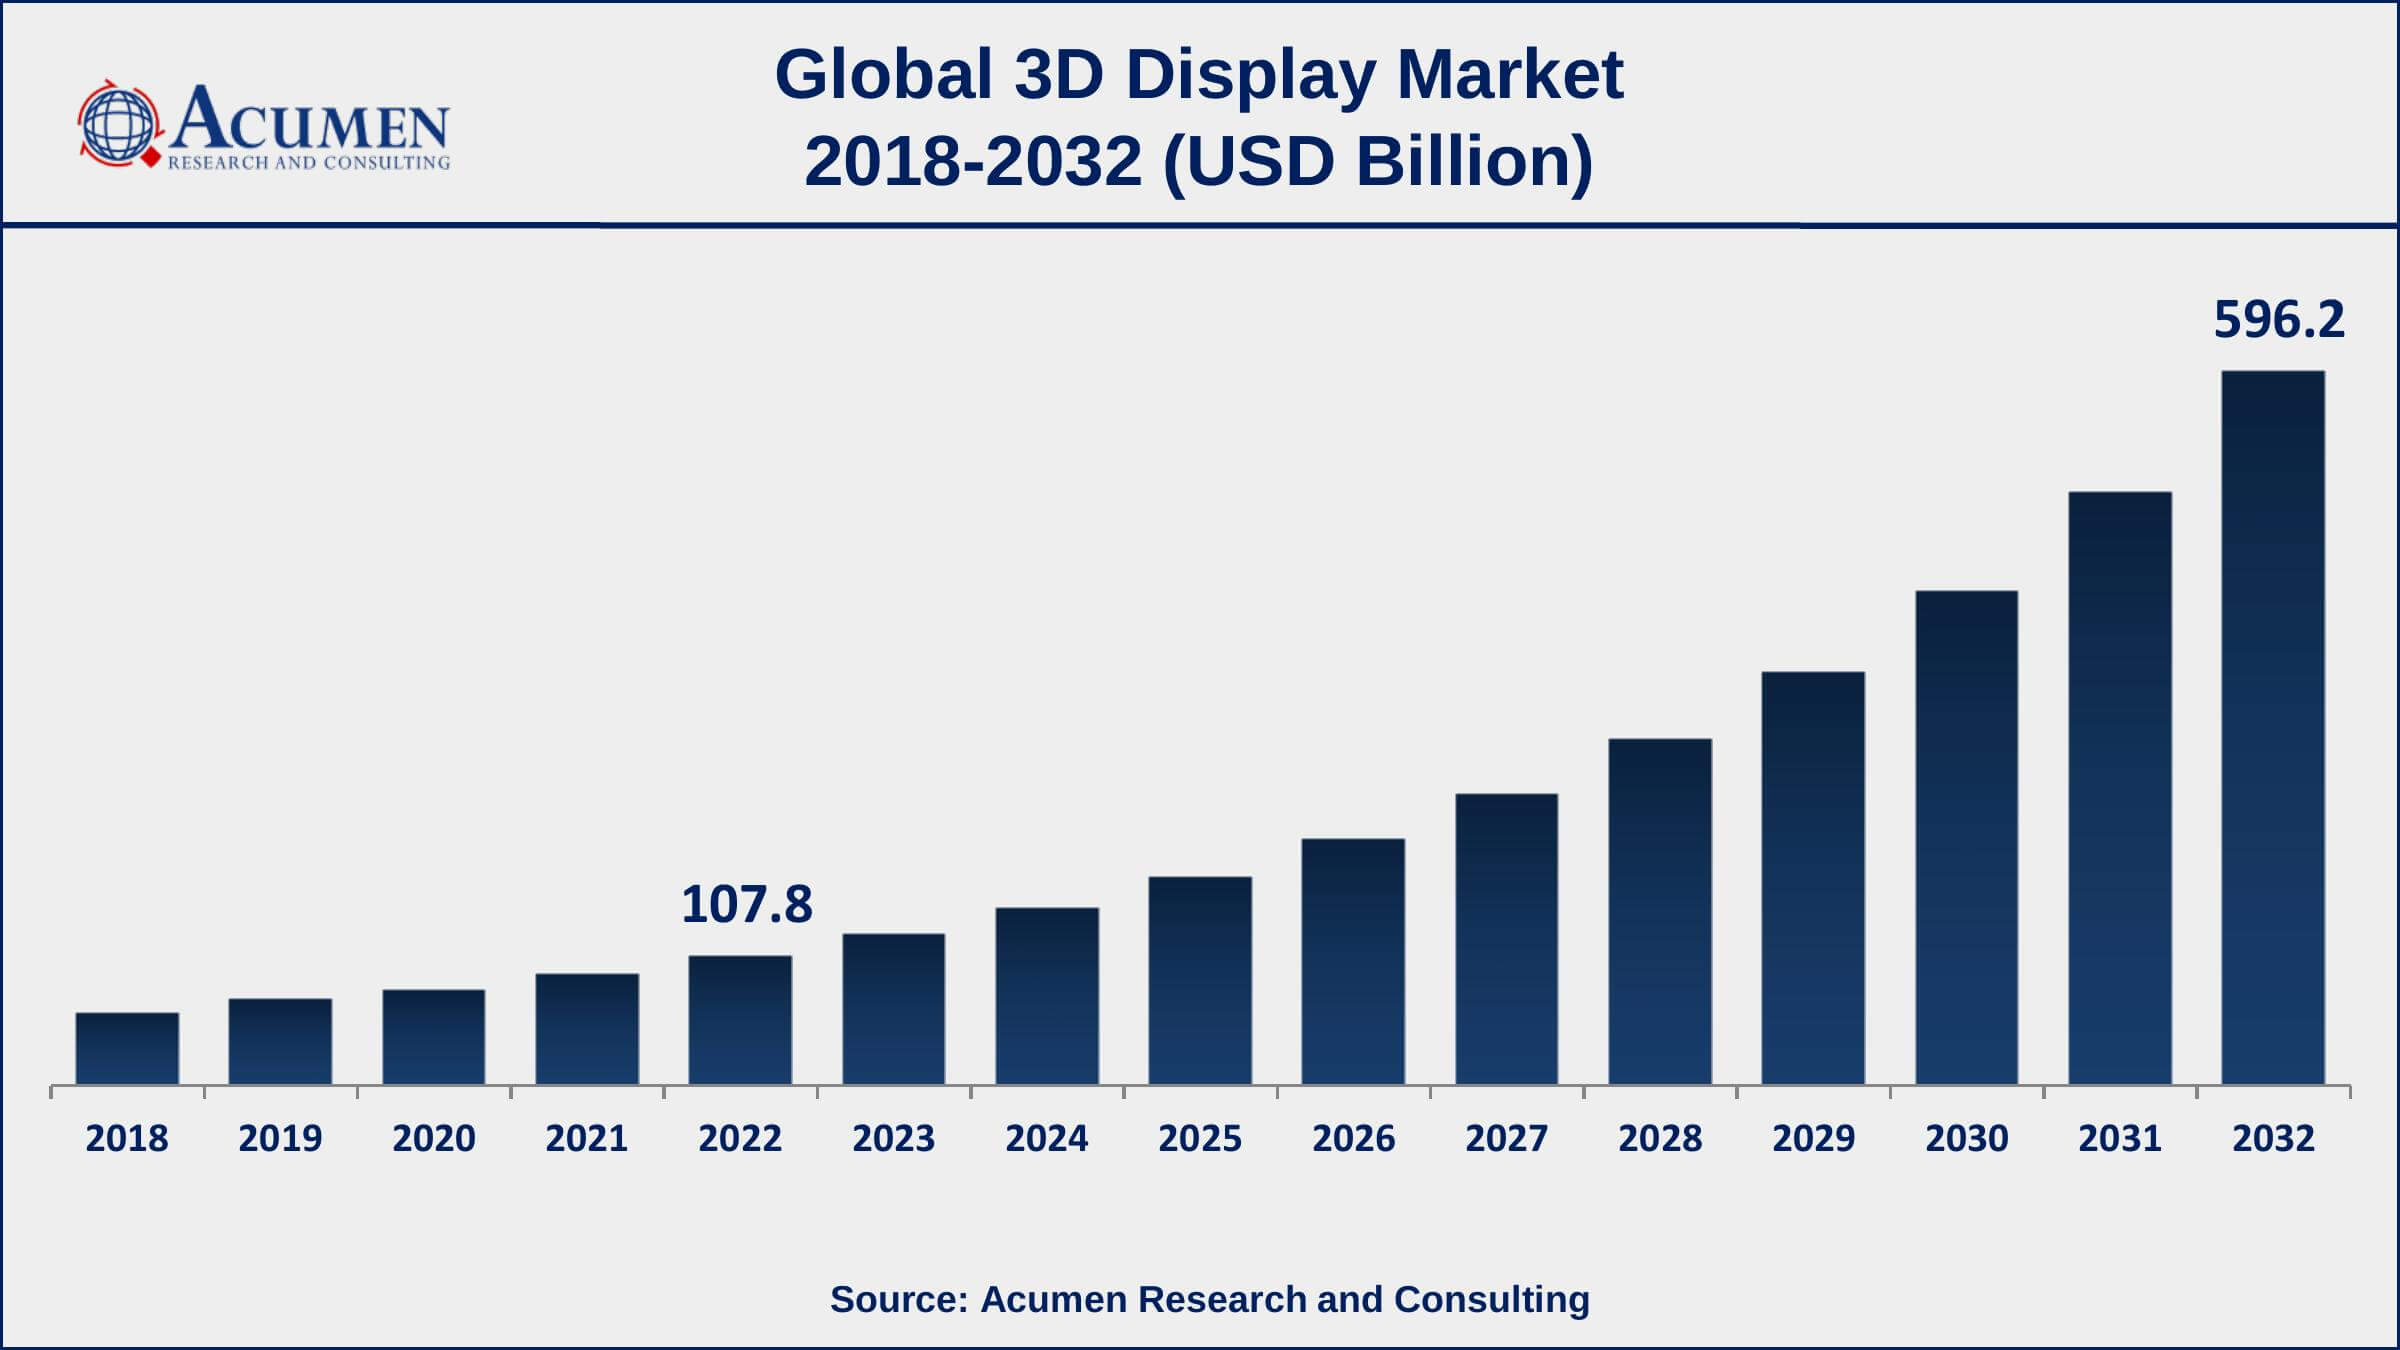 3D Display Market Drivers